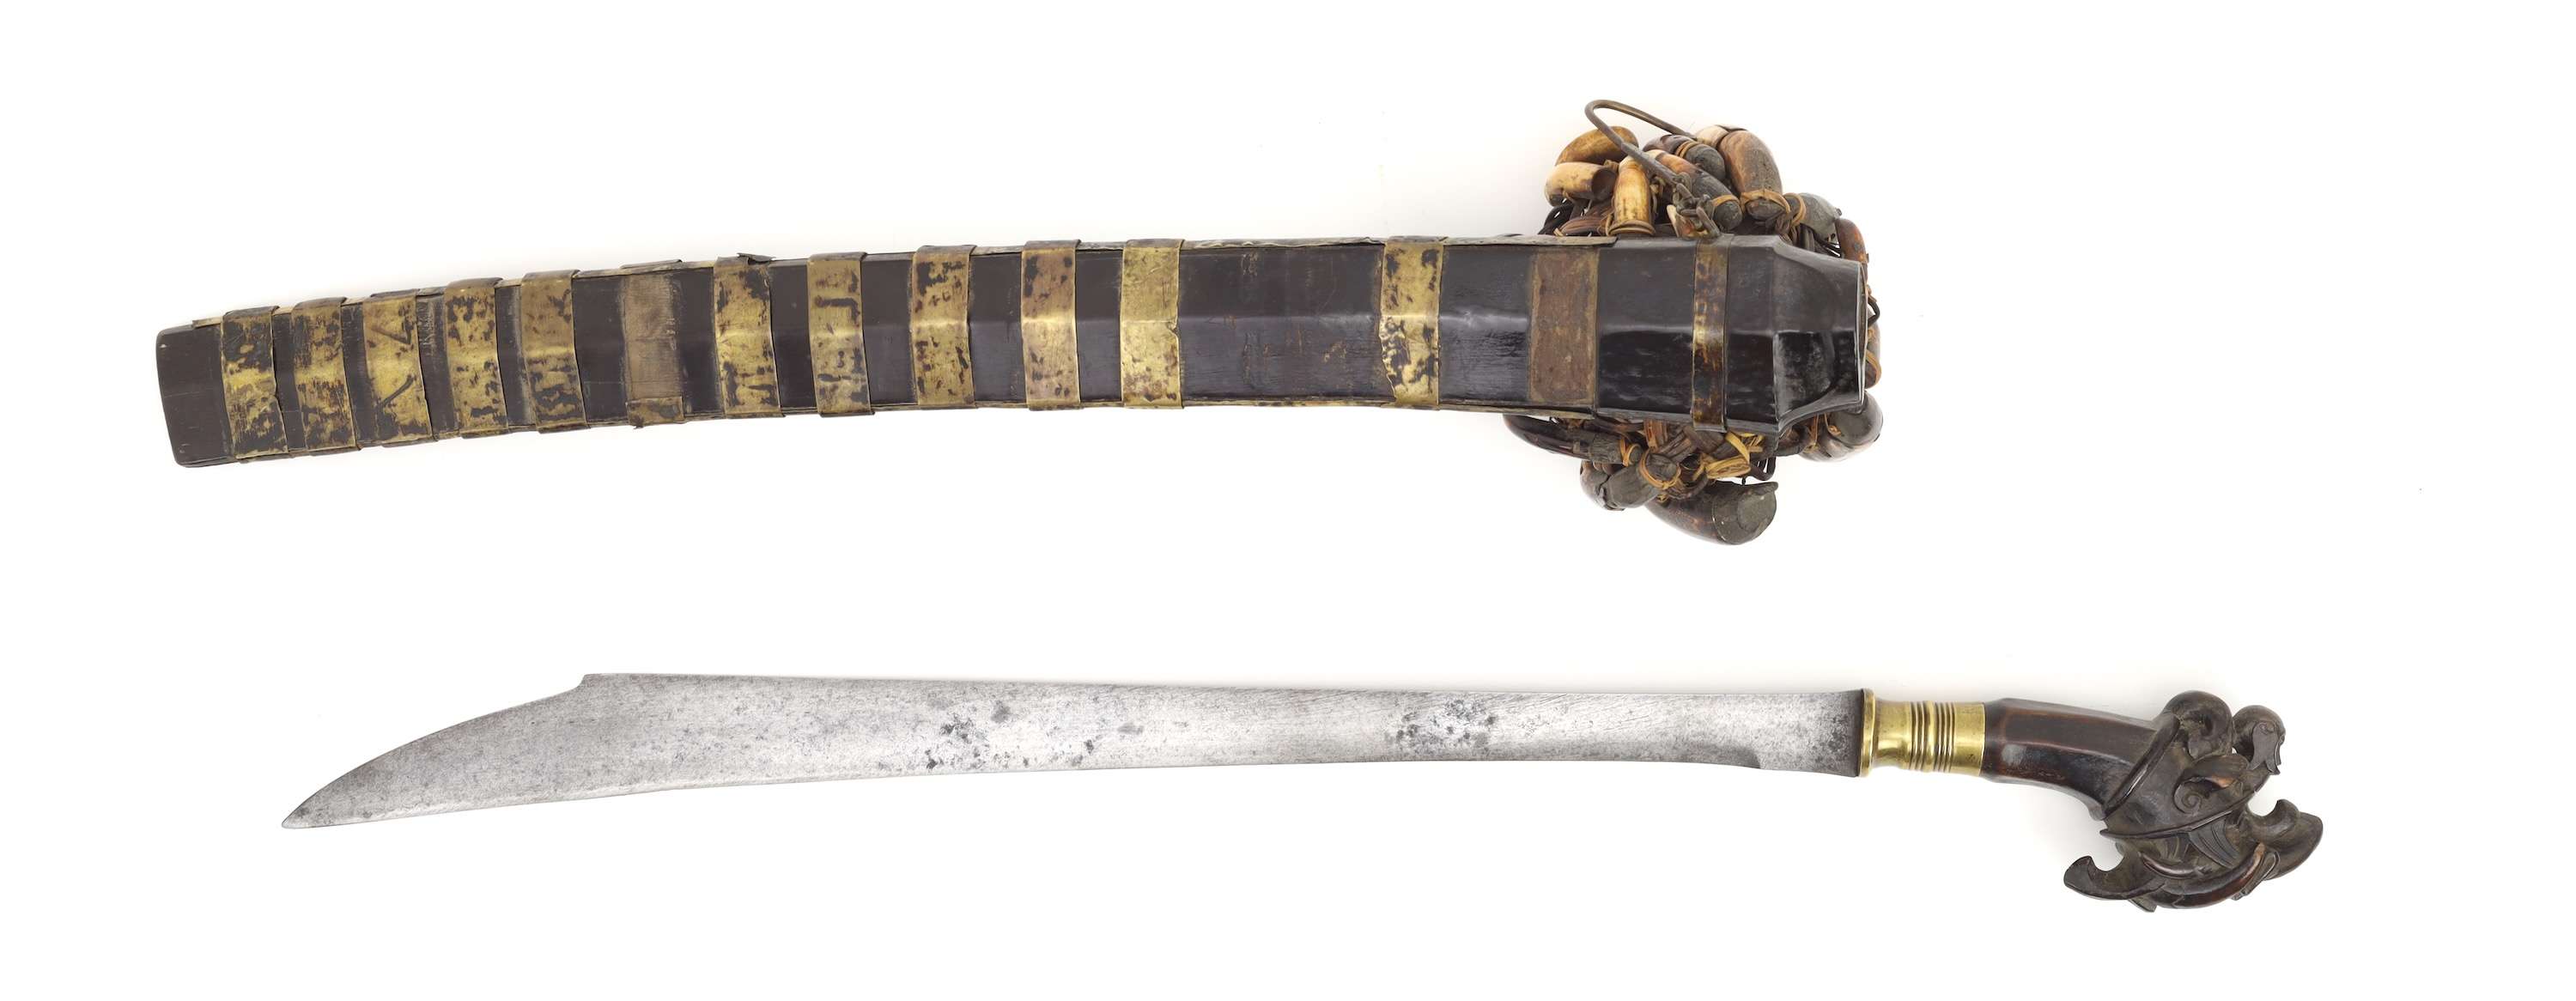 Fine and complete Nias sword called belatu